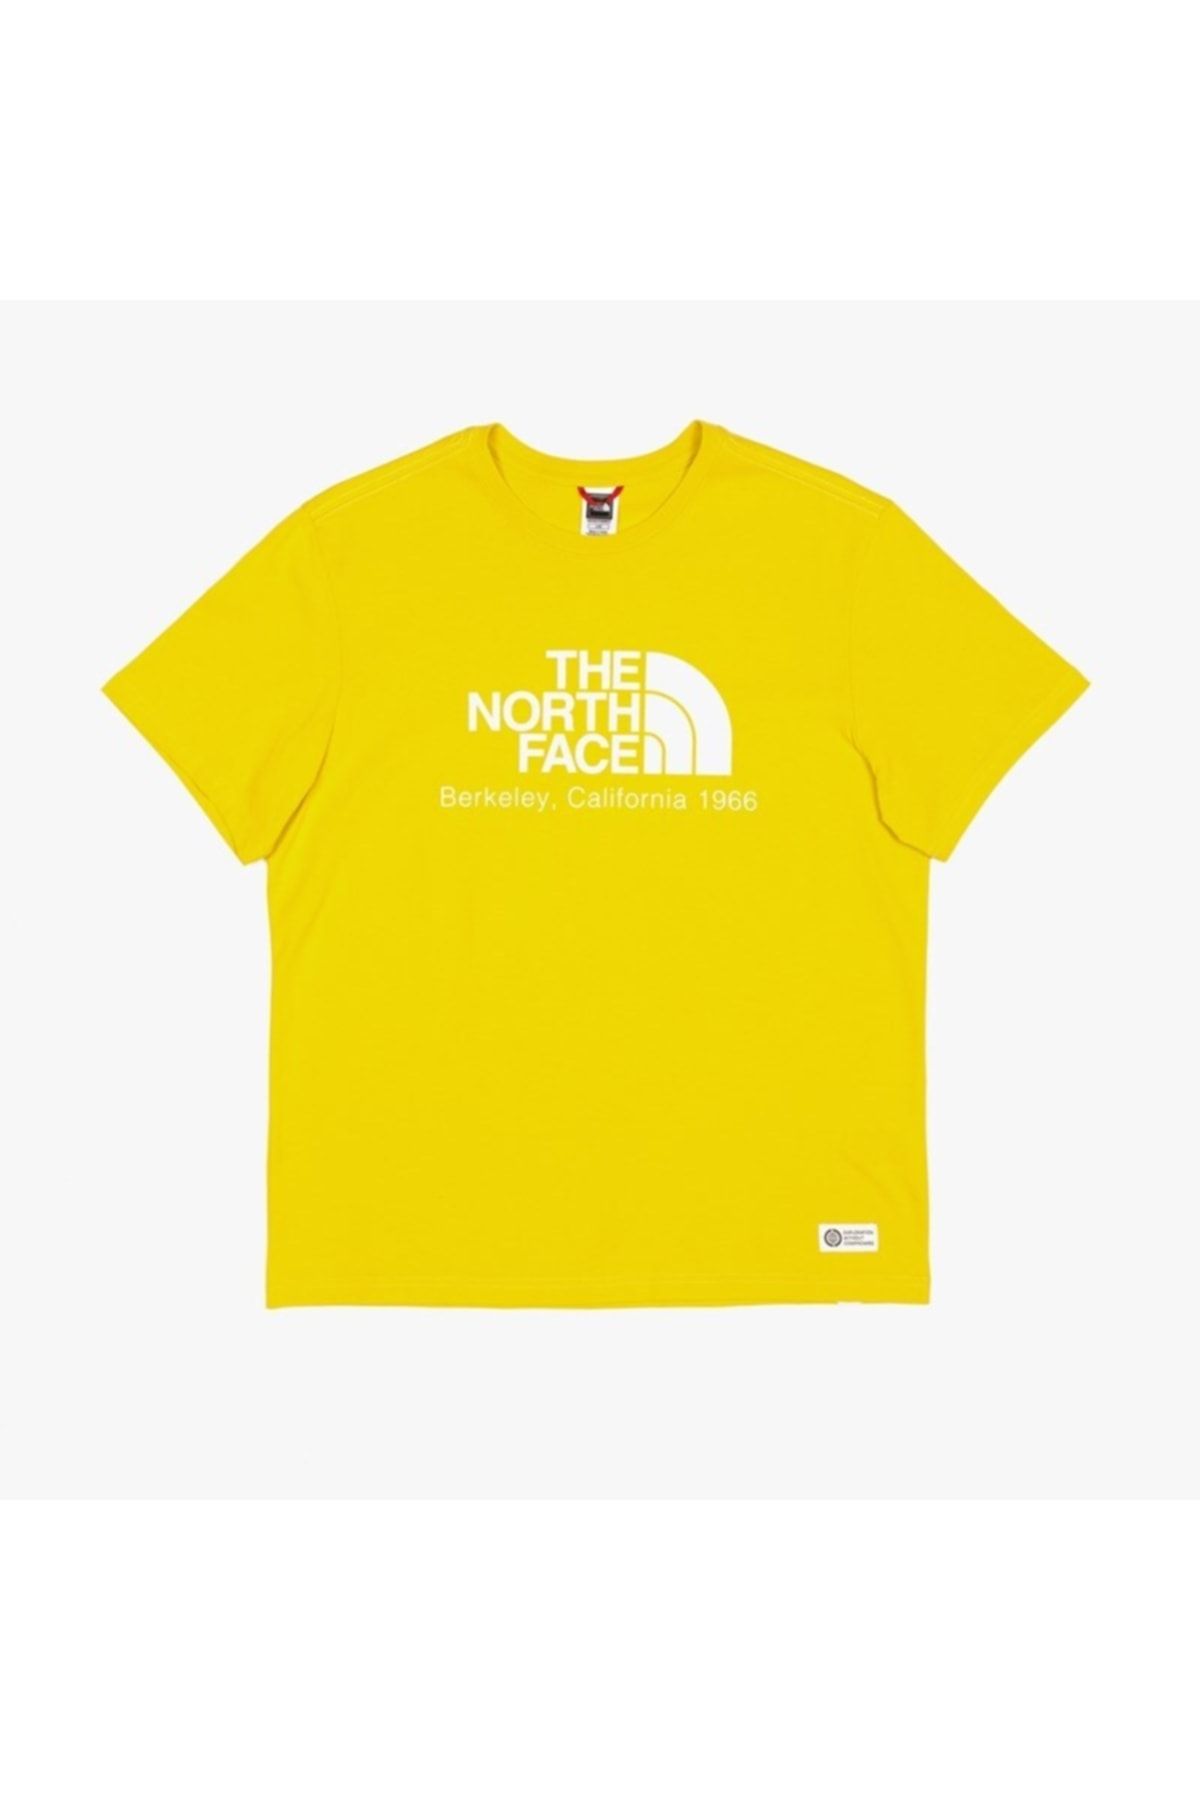 The North Face M Berkeley Claifornia Tee- In Scrap Mat Erkek Sarı Tshirt Nf0a55ge7601